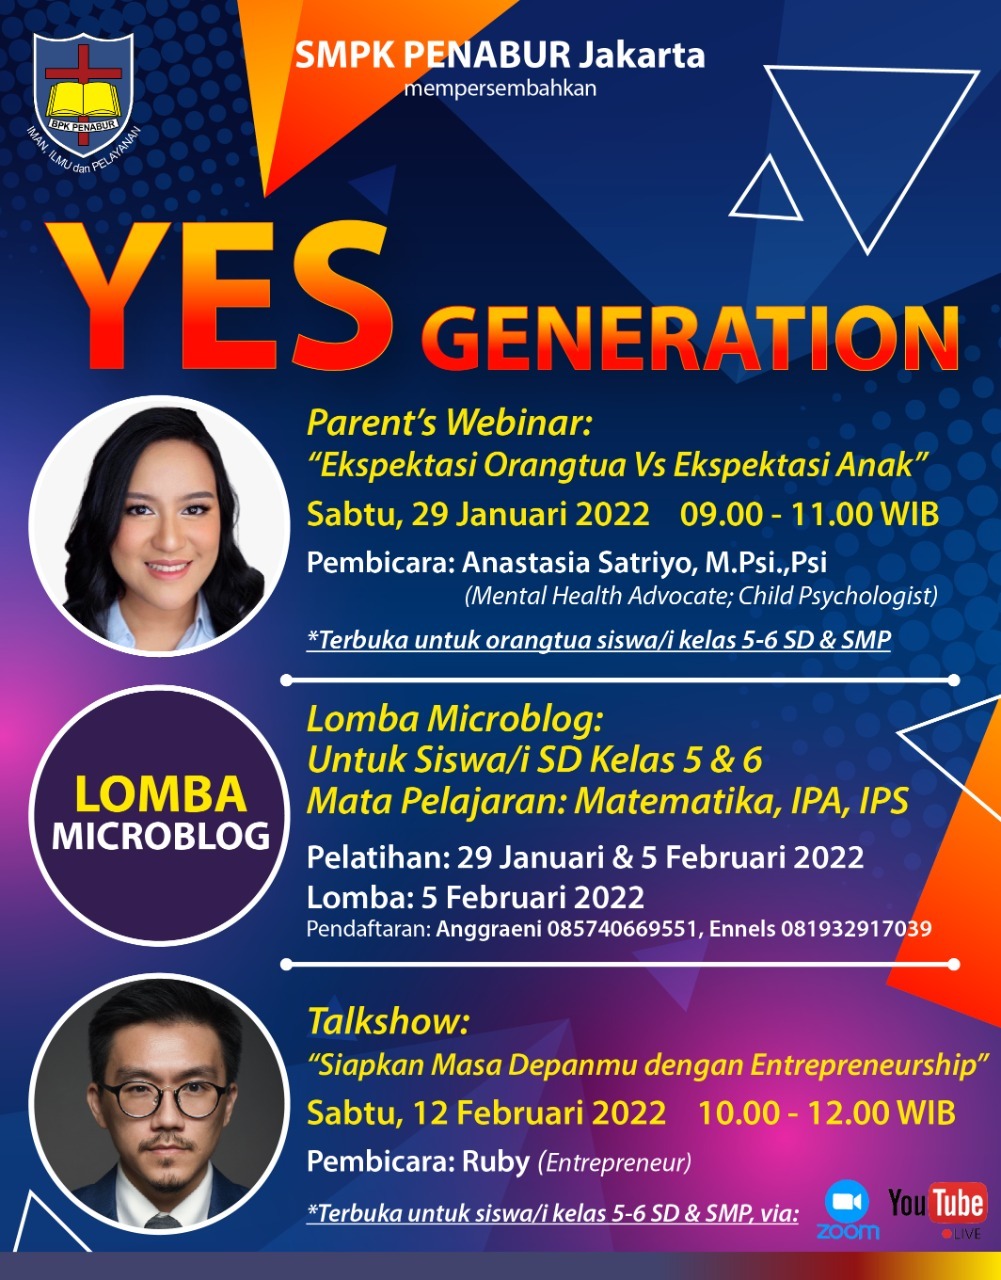 "YES GENERATION" SMPK PENABUR Jakarta